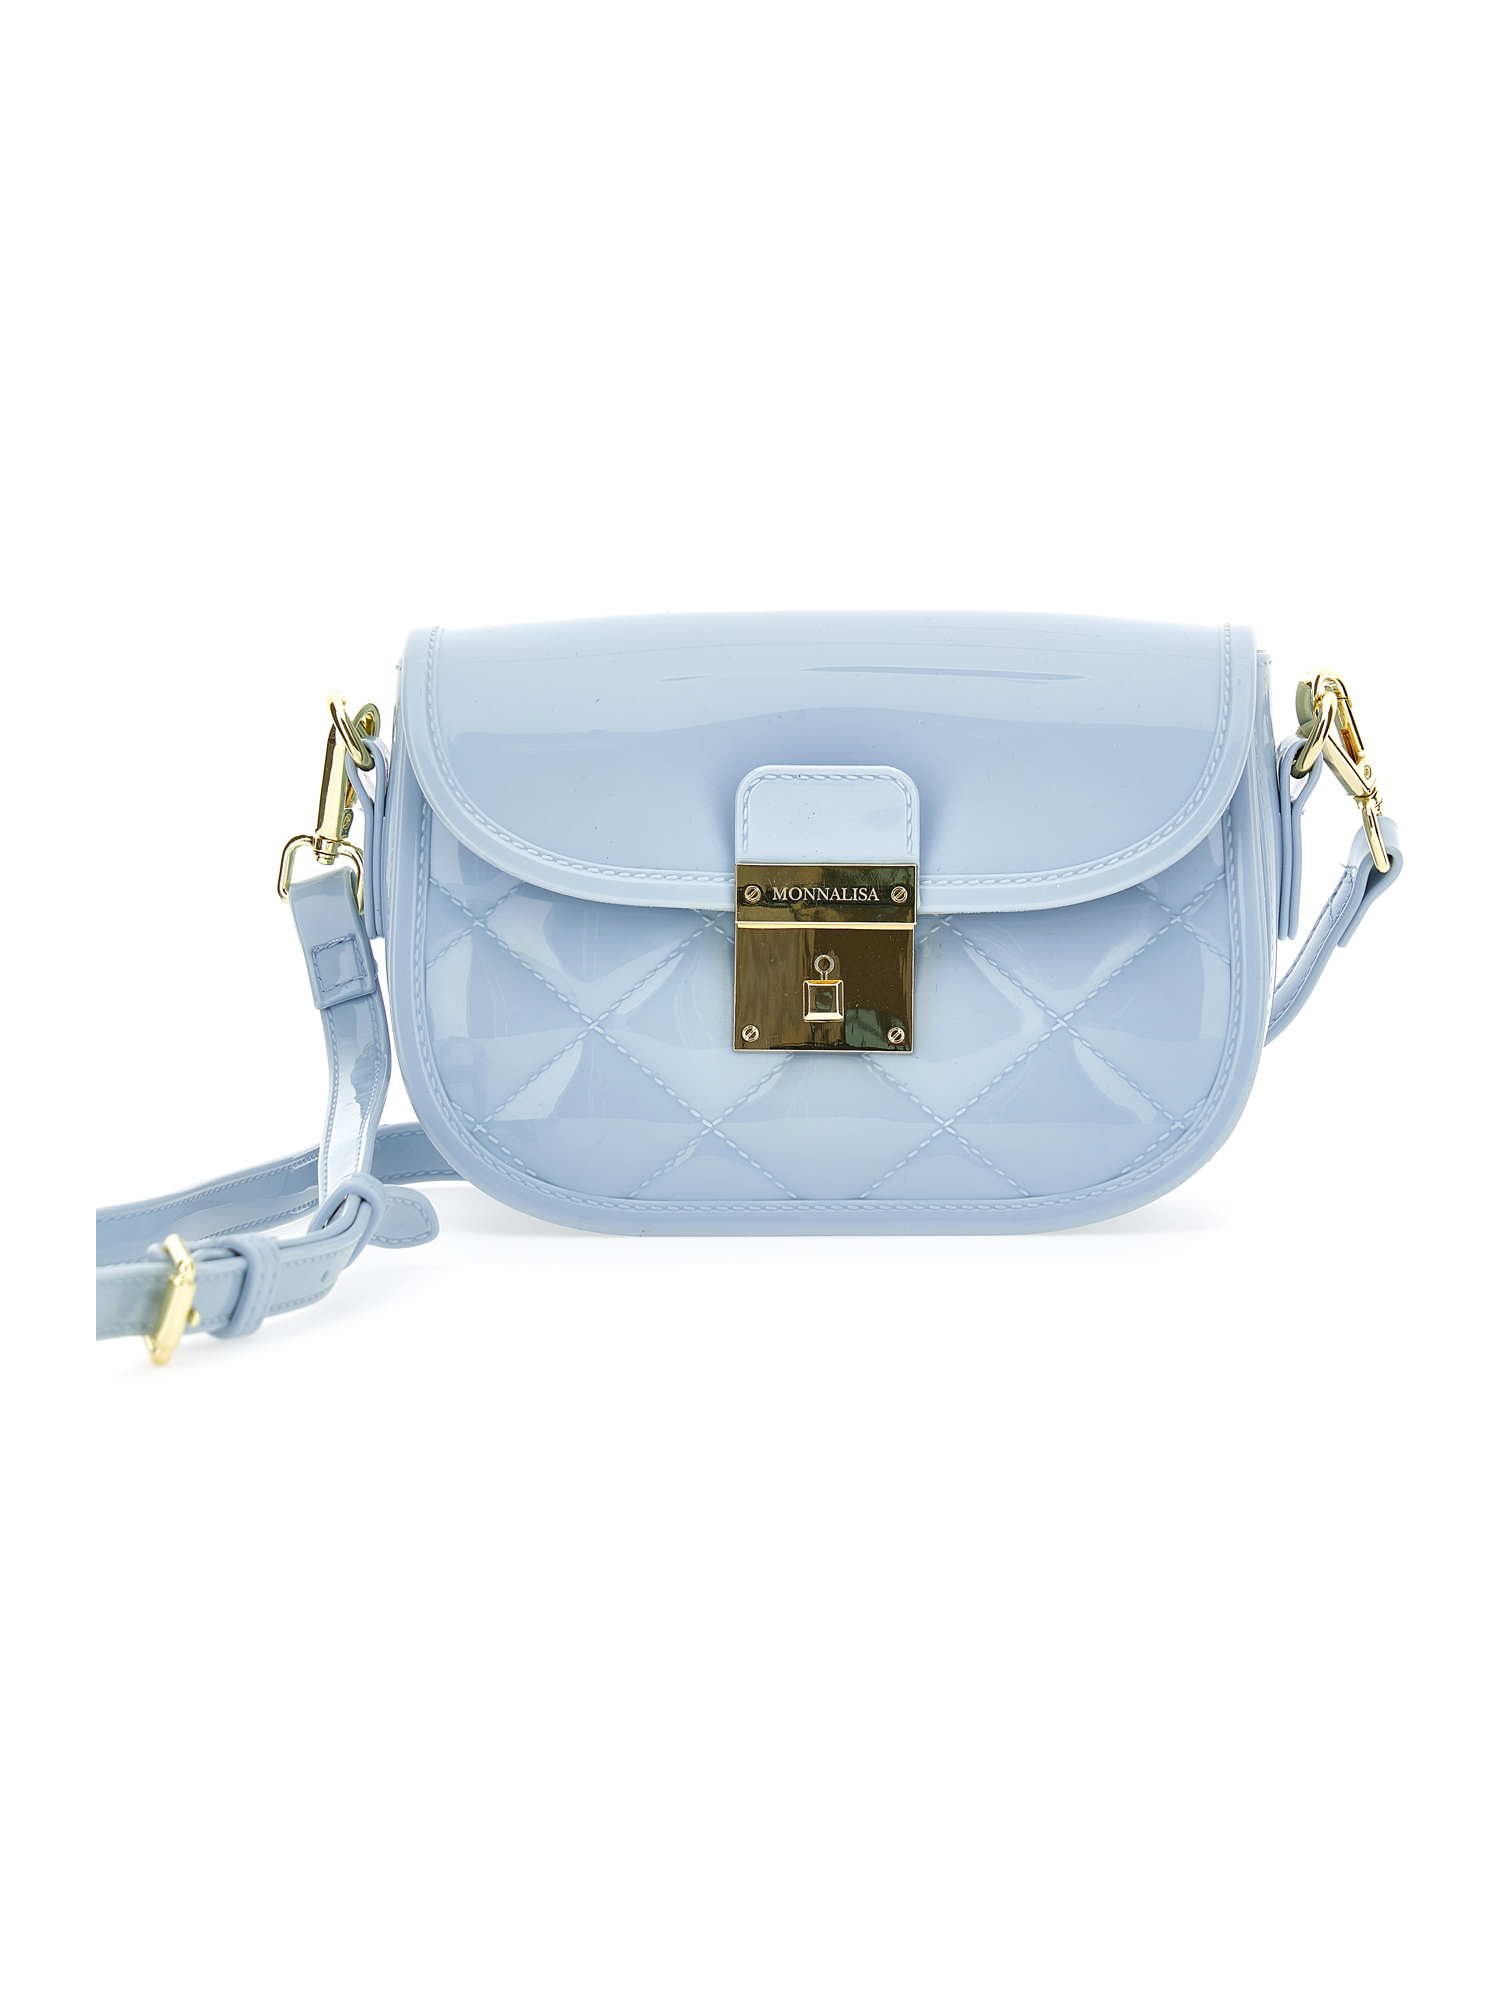 Monnalisa Pvc Bag With Shoulder Strap In Sky Blue